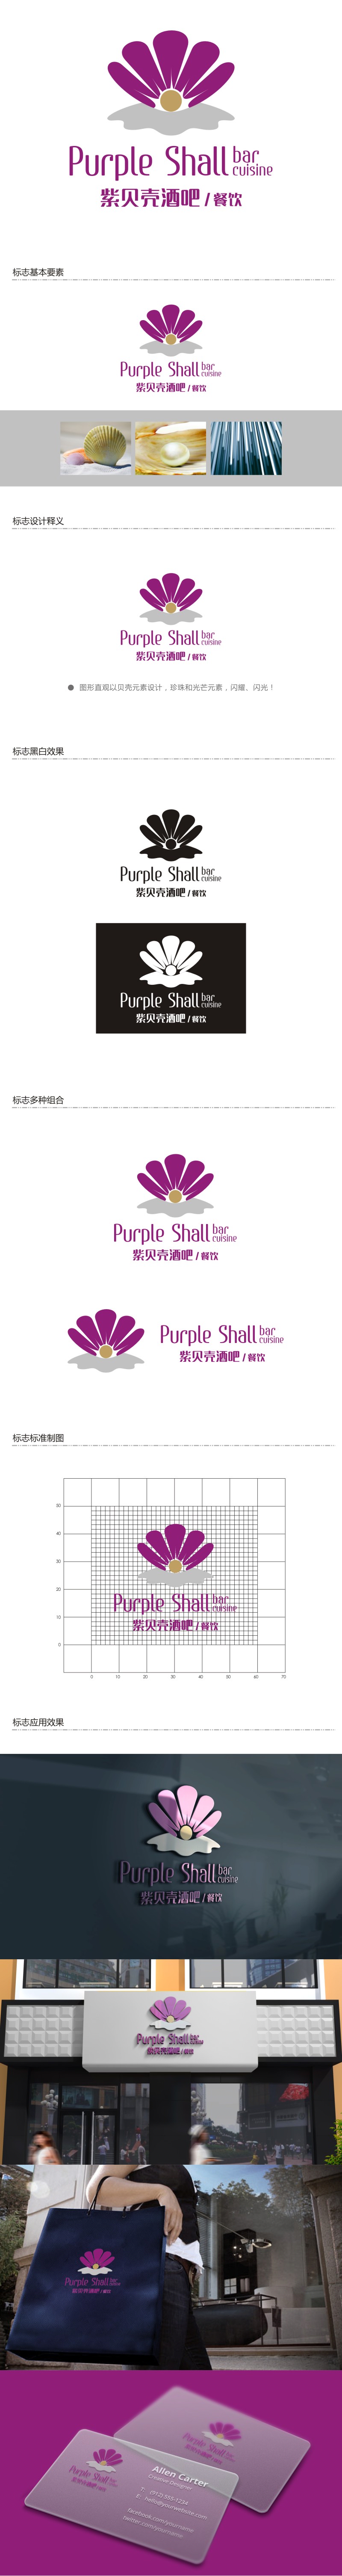 谭家强的紫贝壳酒吧/餐饮Purple shall bar/cuisinelogo设计